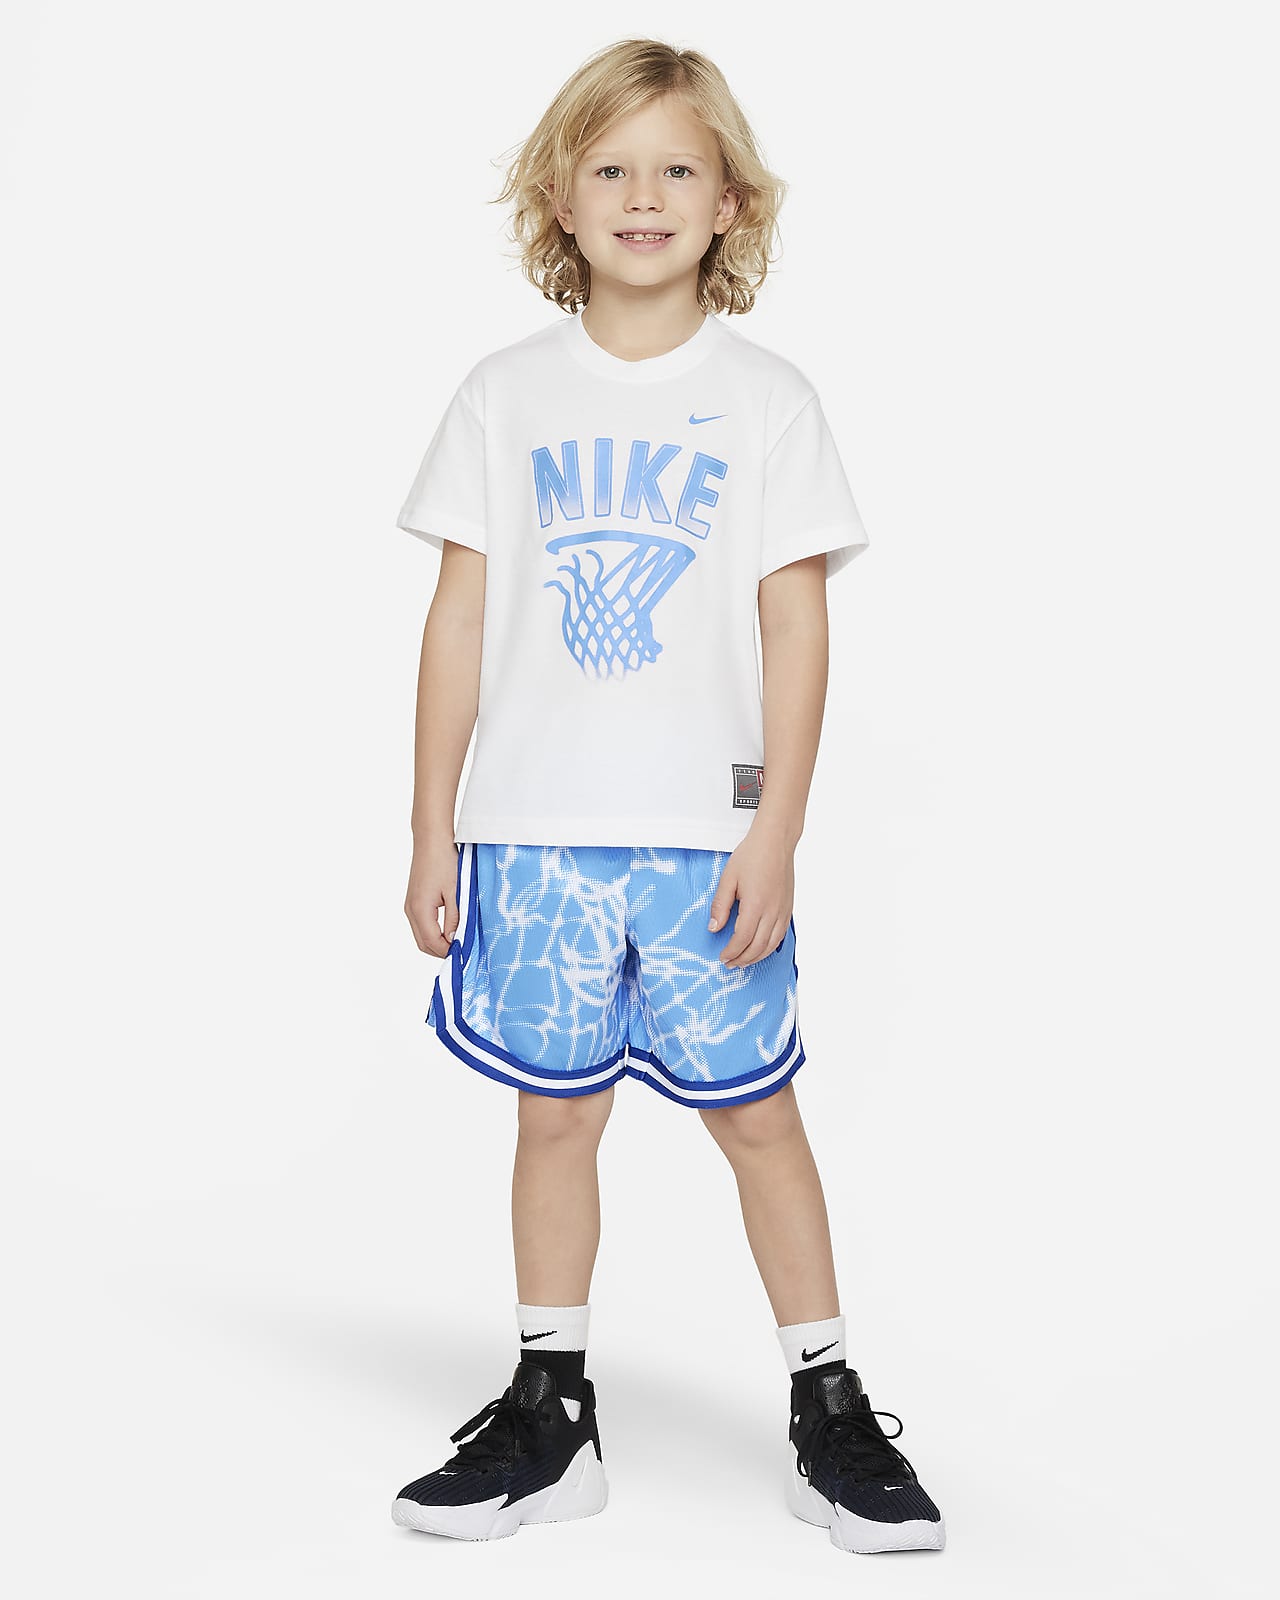 Nike Culture of Basketball Little Kids' Dri-FIT Mesh Shorts Set